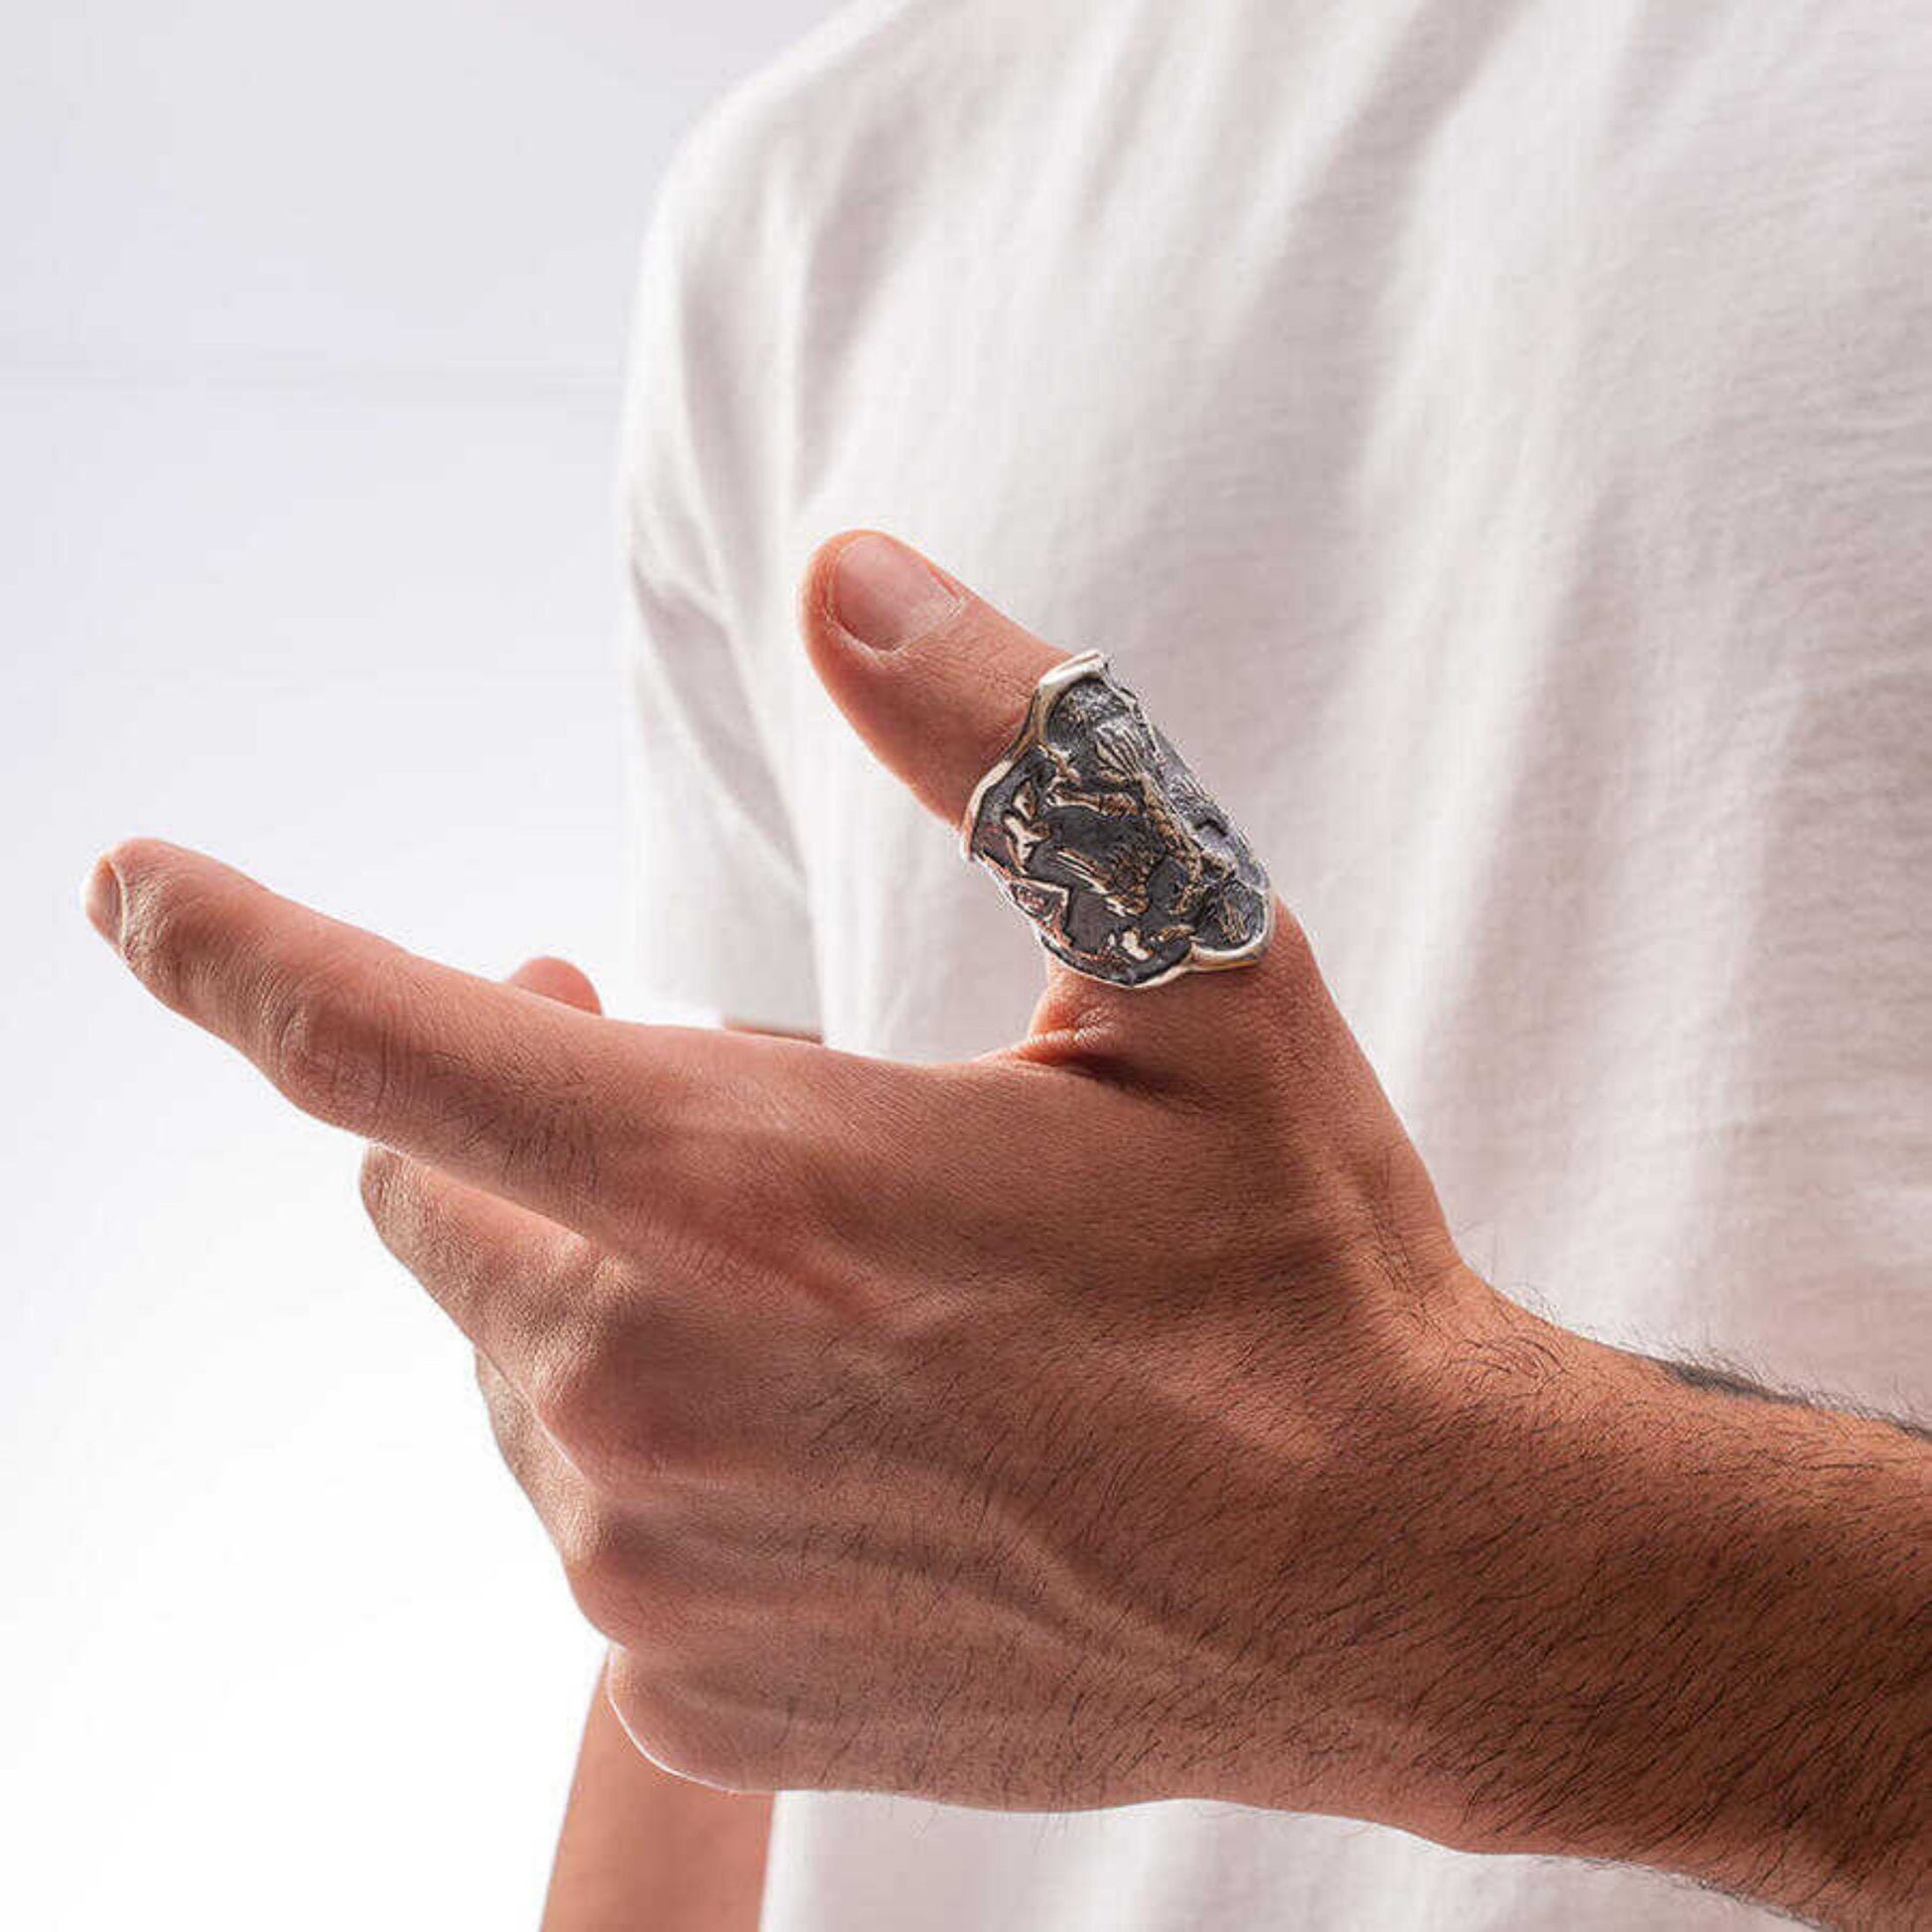 Original Dirilis Ertugrul Zihgir, Licensed Ertugrul Thumb Ring, Handmade 925 Sterling Silver Ertugrul Zihgir / Model 4